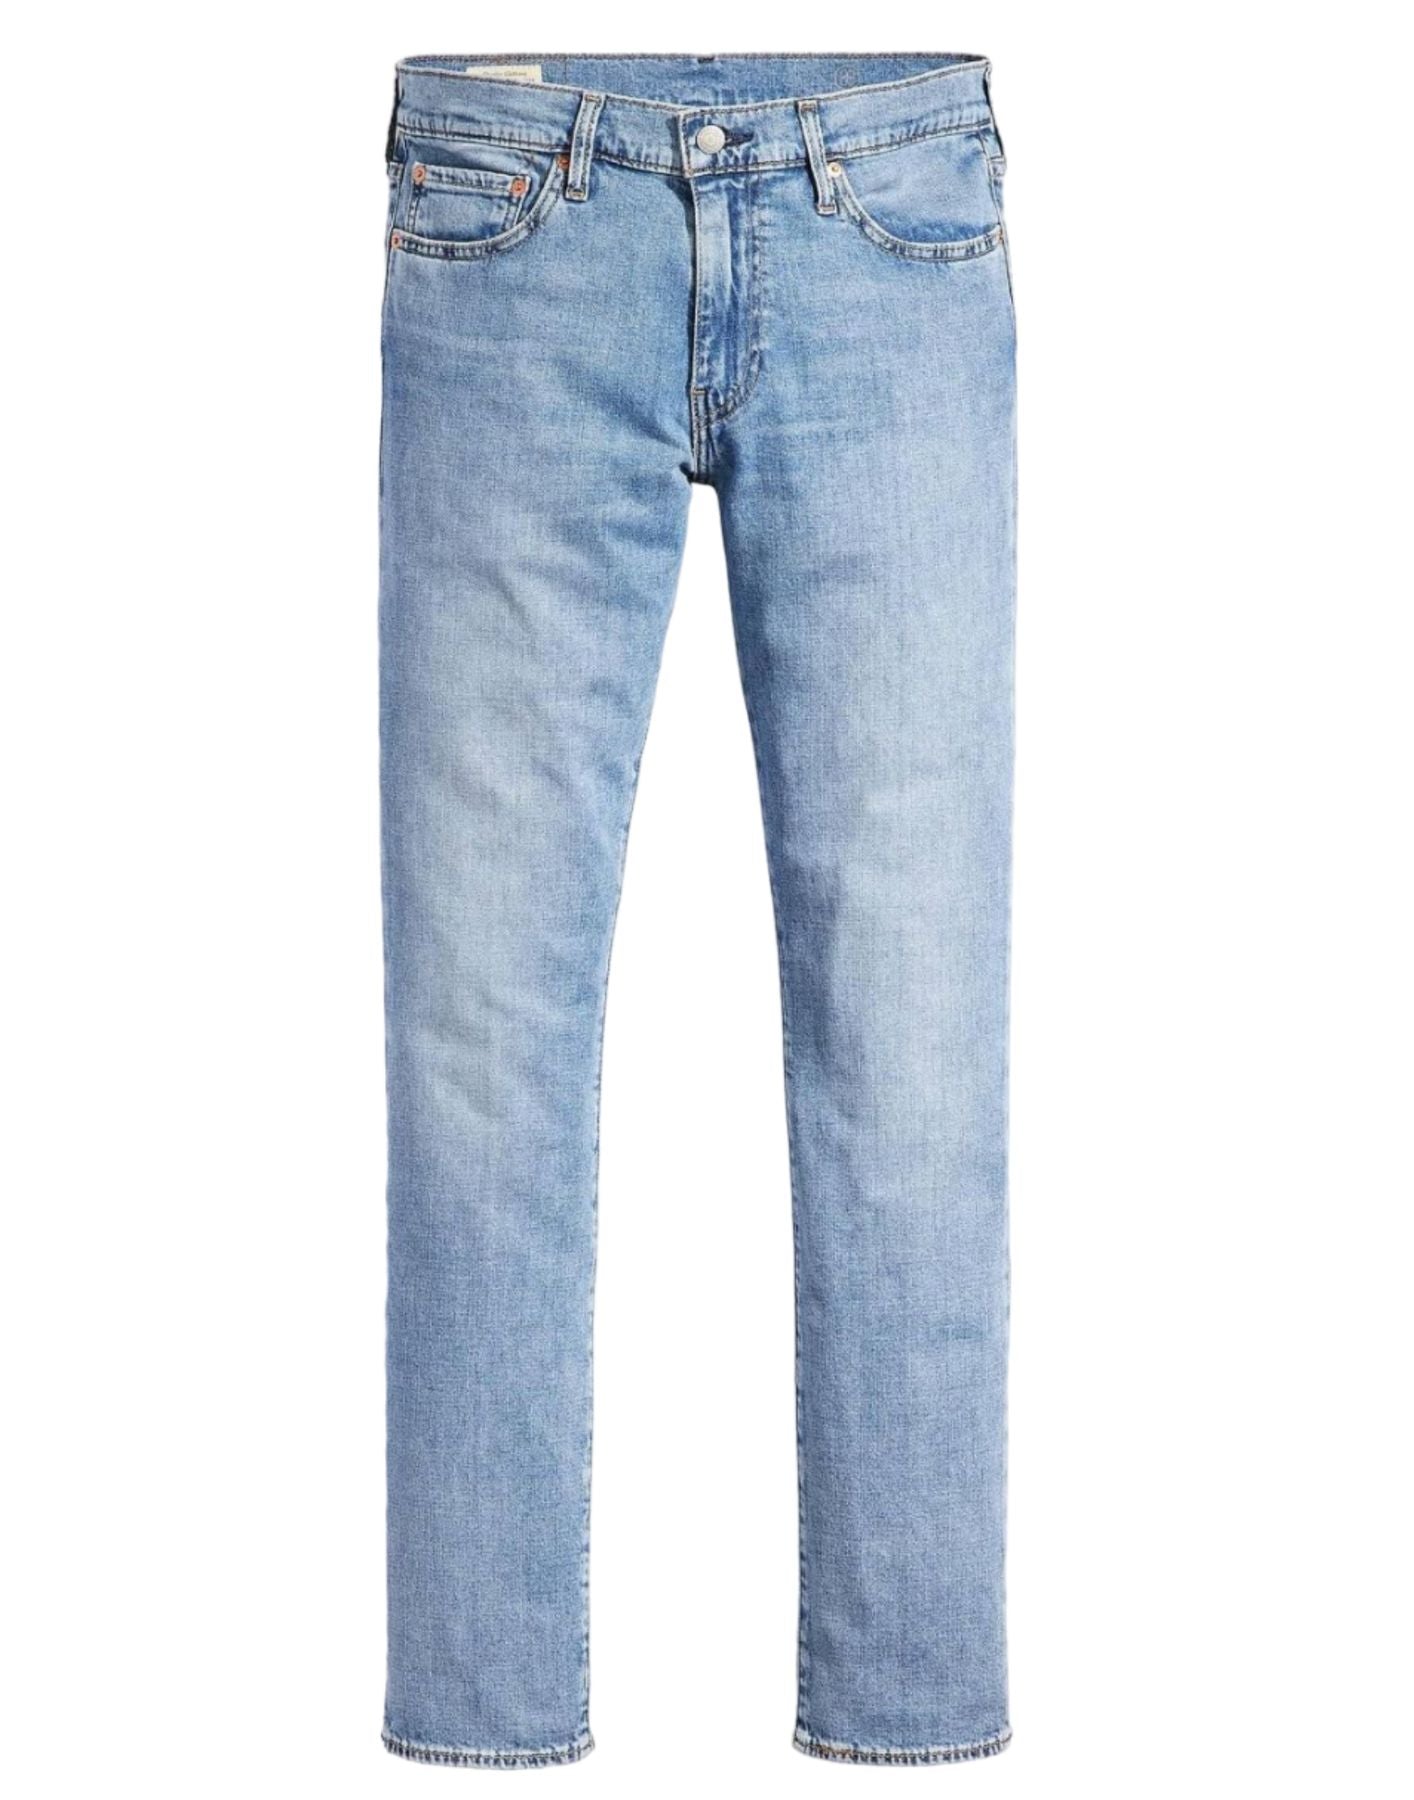 Jeans for man 04511 5933 blue Levi's